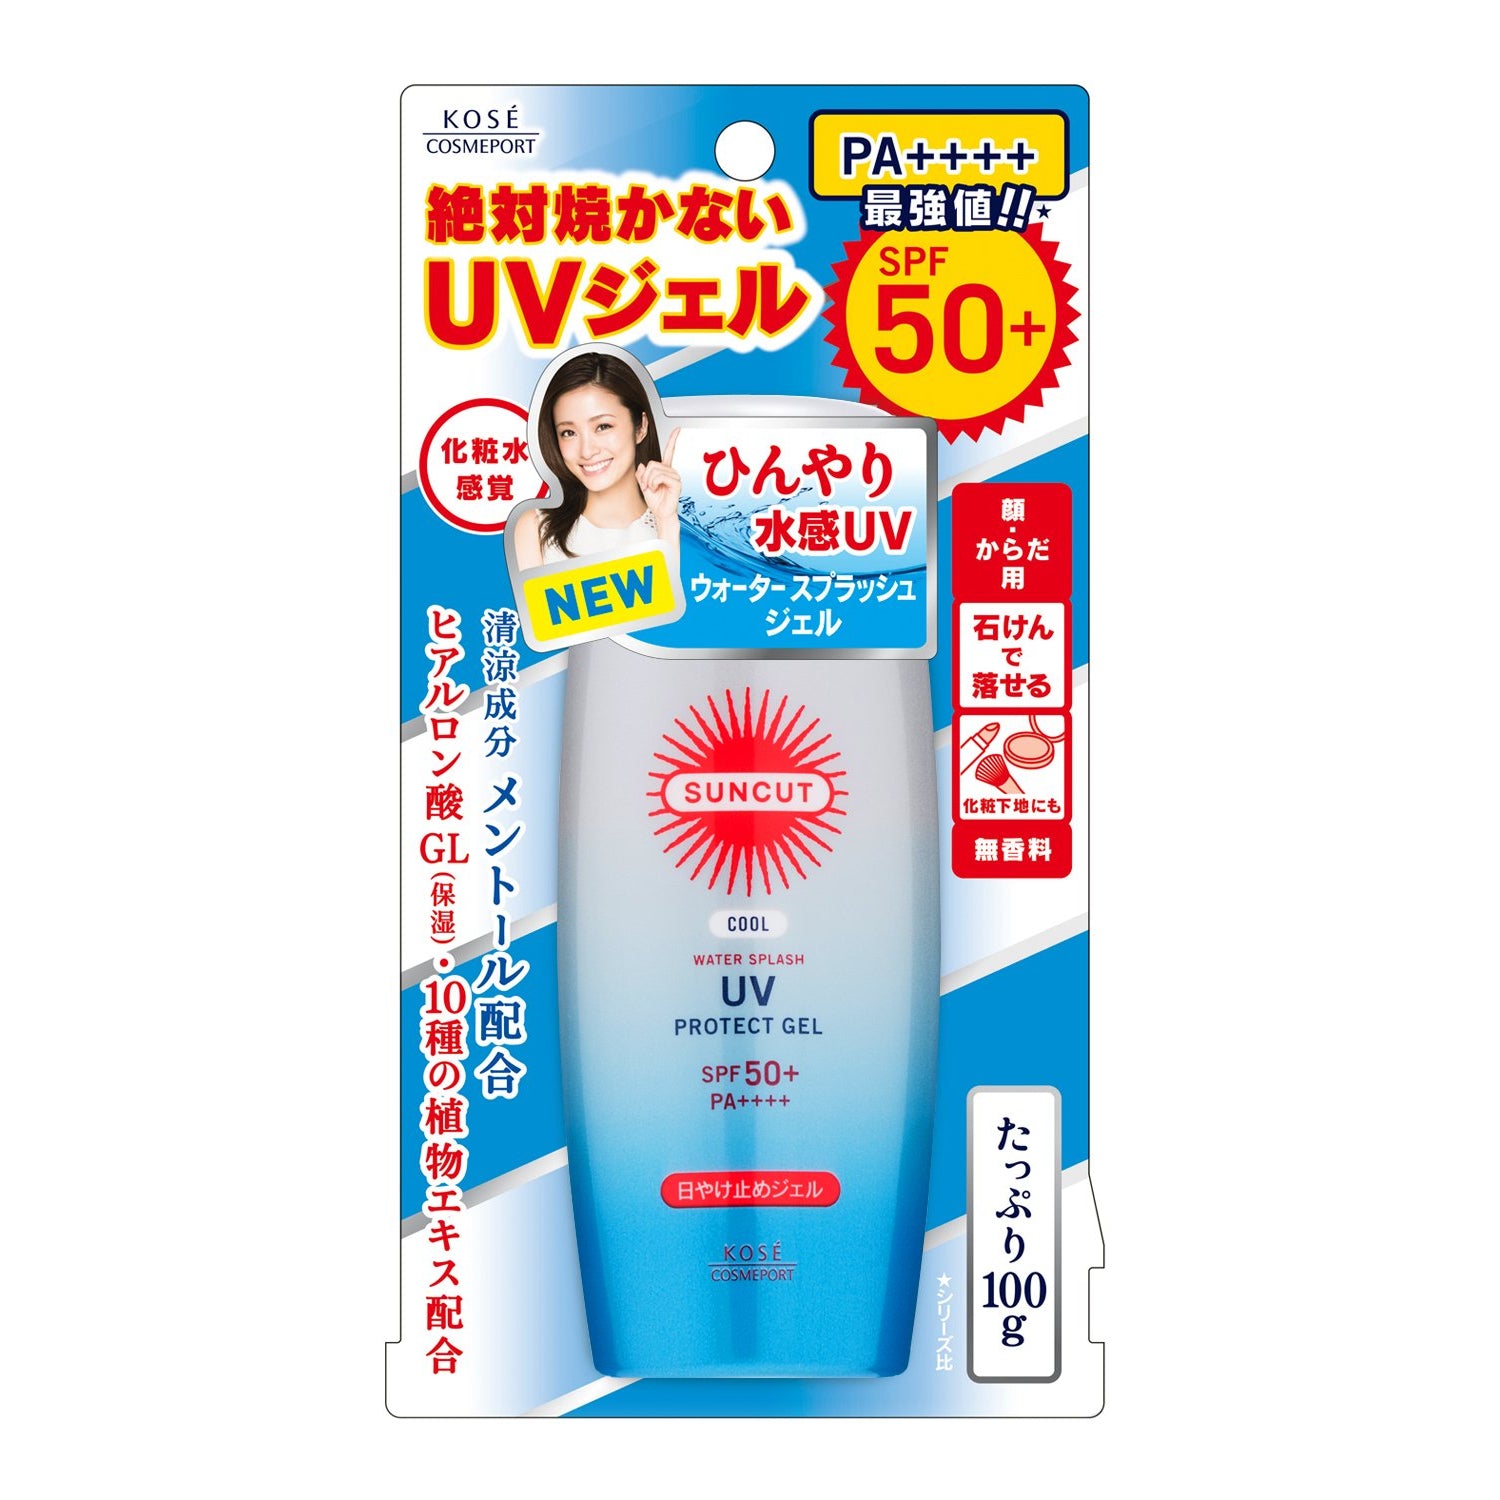 Kose Cosmeport Suncut Cool Water Splash UV Protect Gel SPF 50+ PA++++ Beauty Kose   